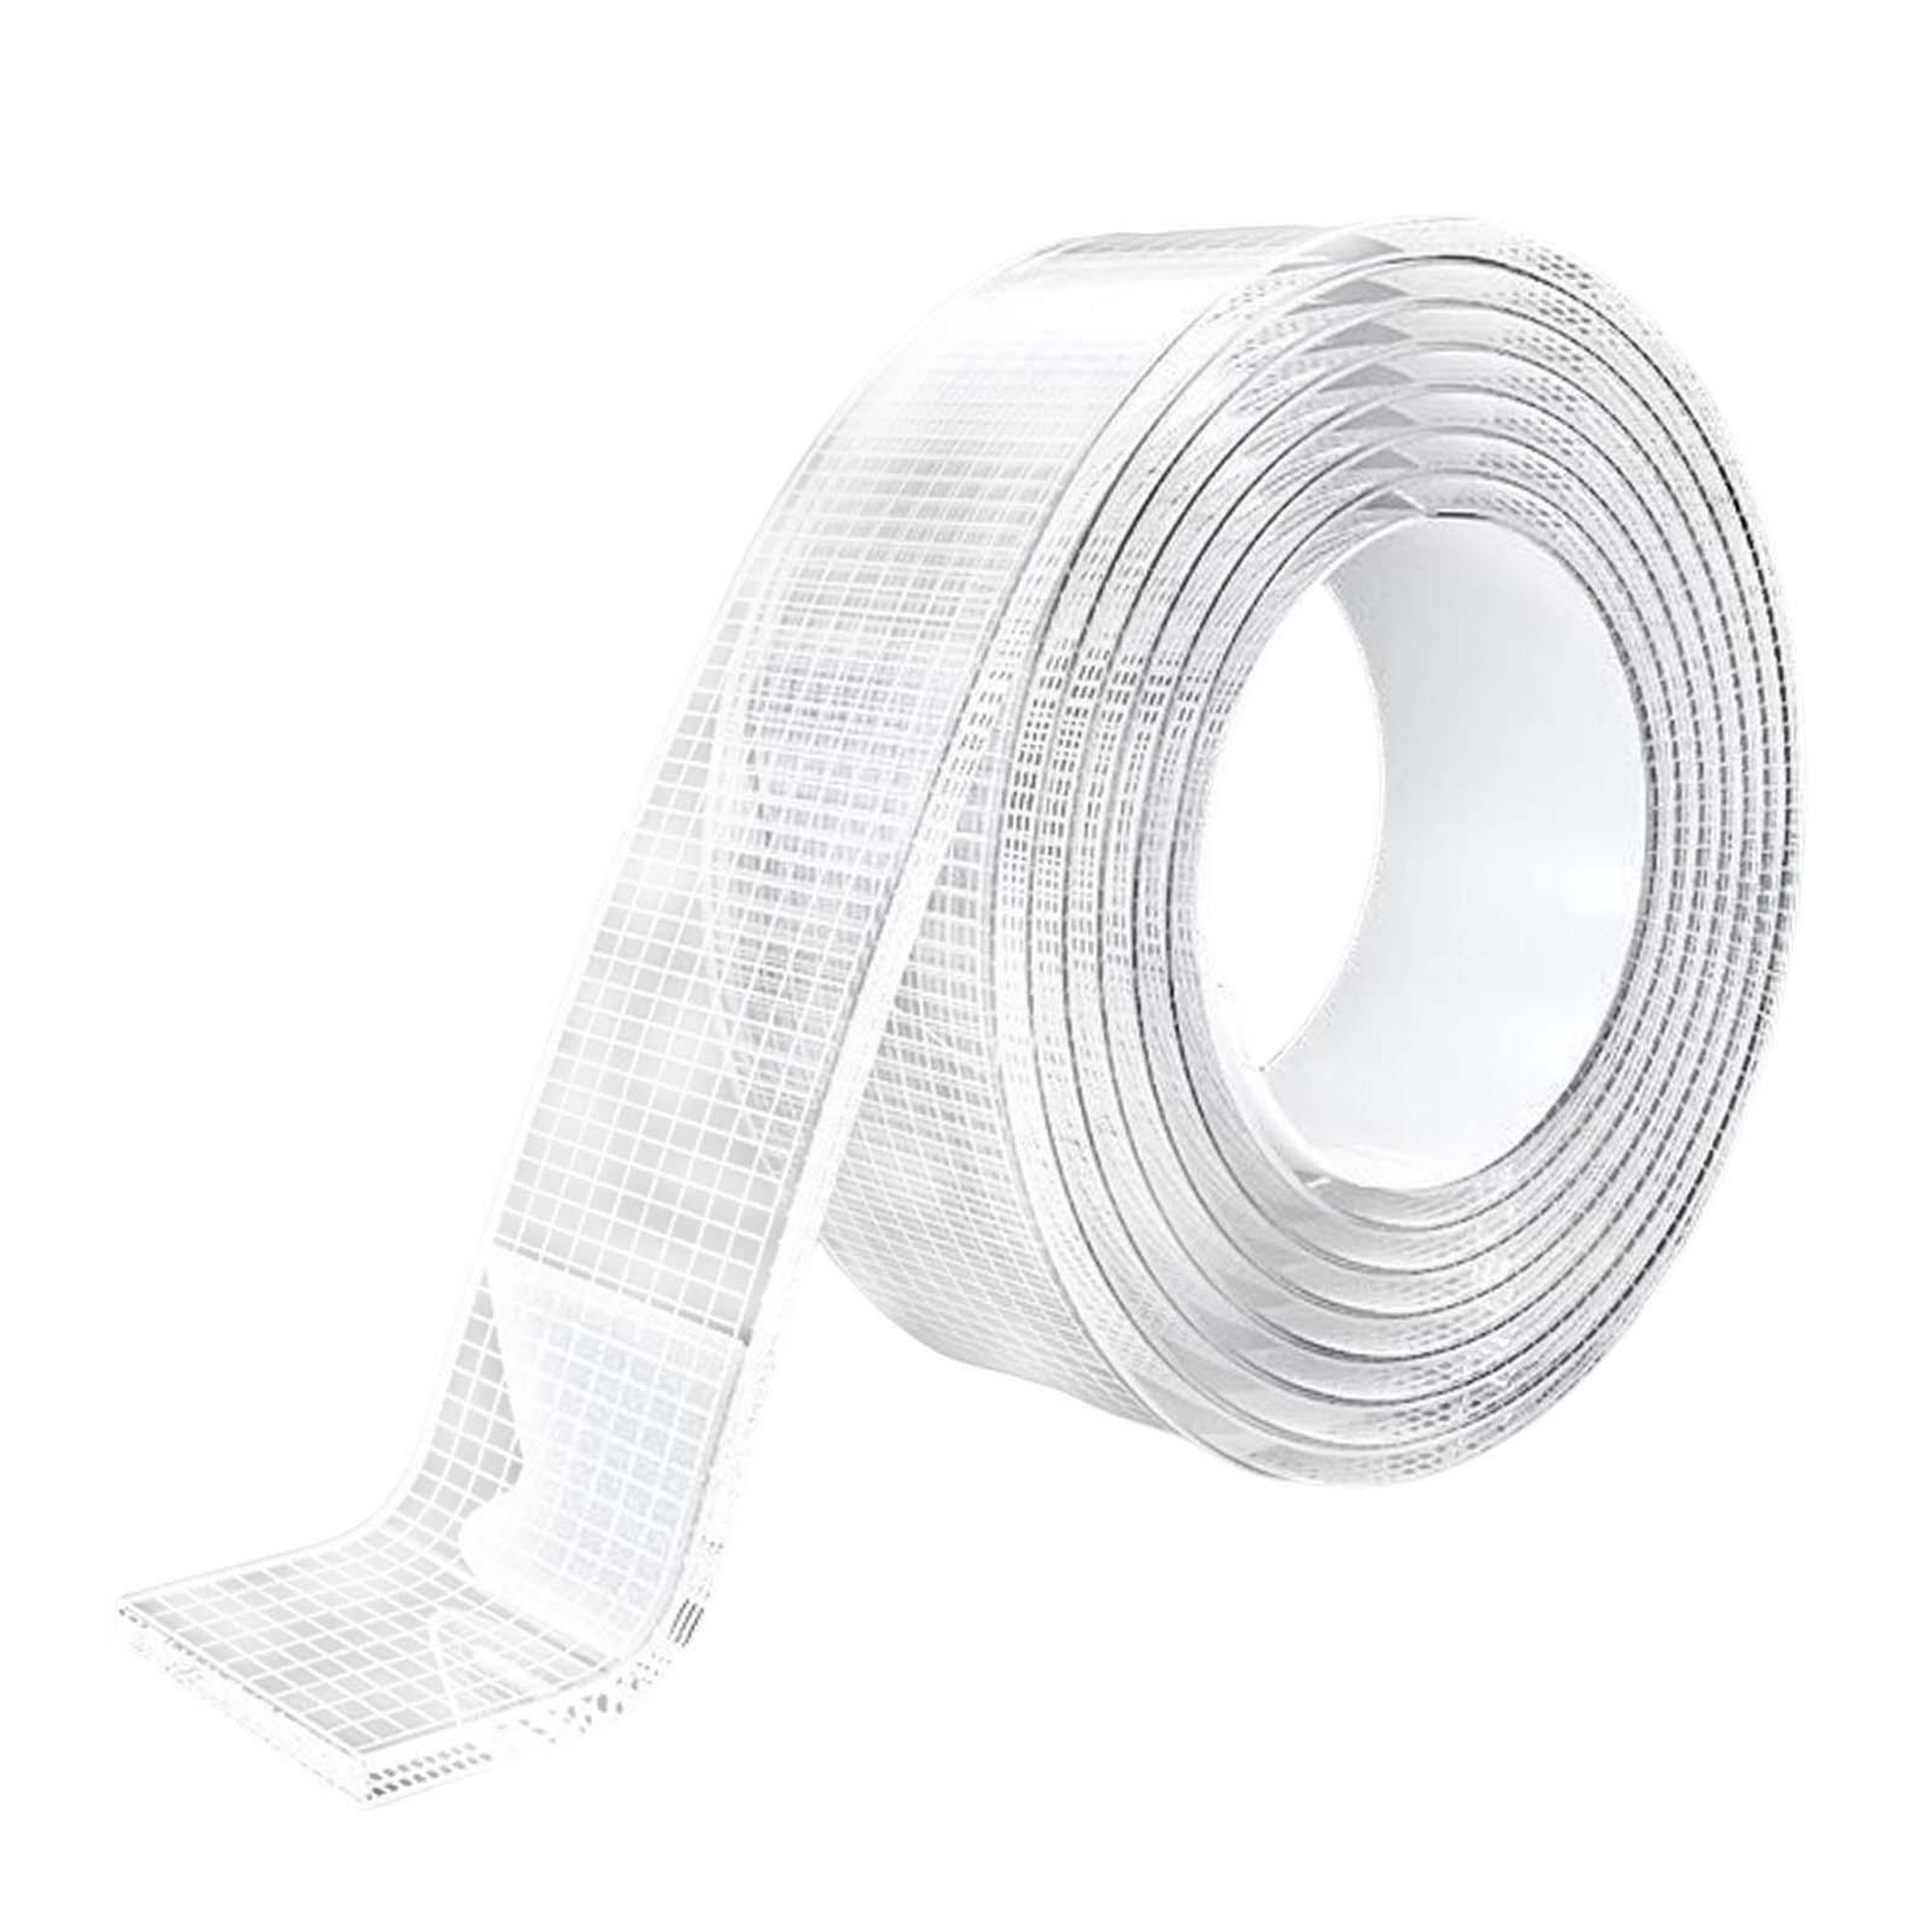 Nano Tape Heavy Duty Cinta adhesiva de montaje de doble cara Cintas  extraíbles lavables para pa MABOTO cinta adhesiva